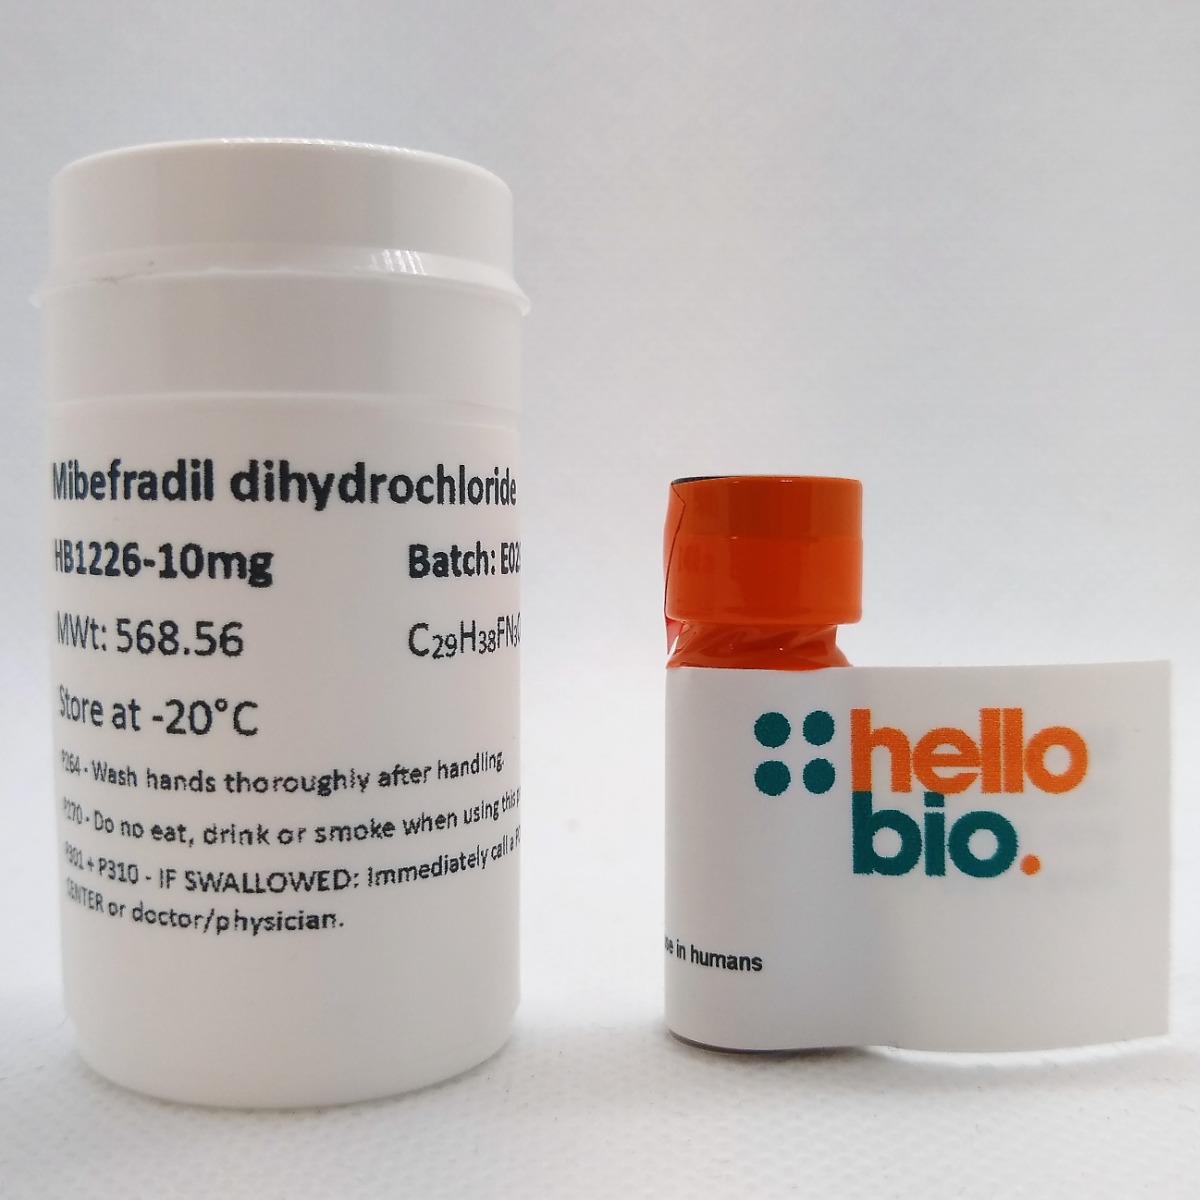 Mibefradil dihydrochloride product vial image | Hello Bio